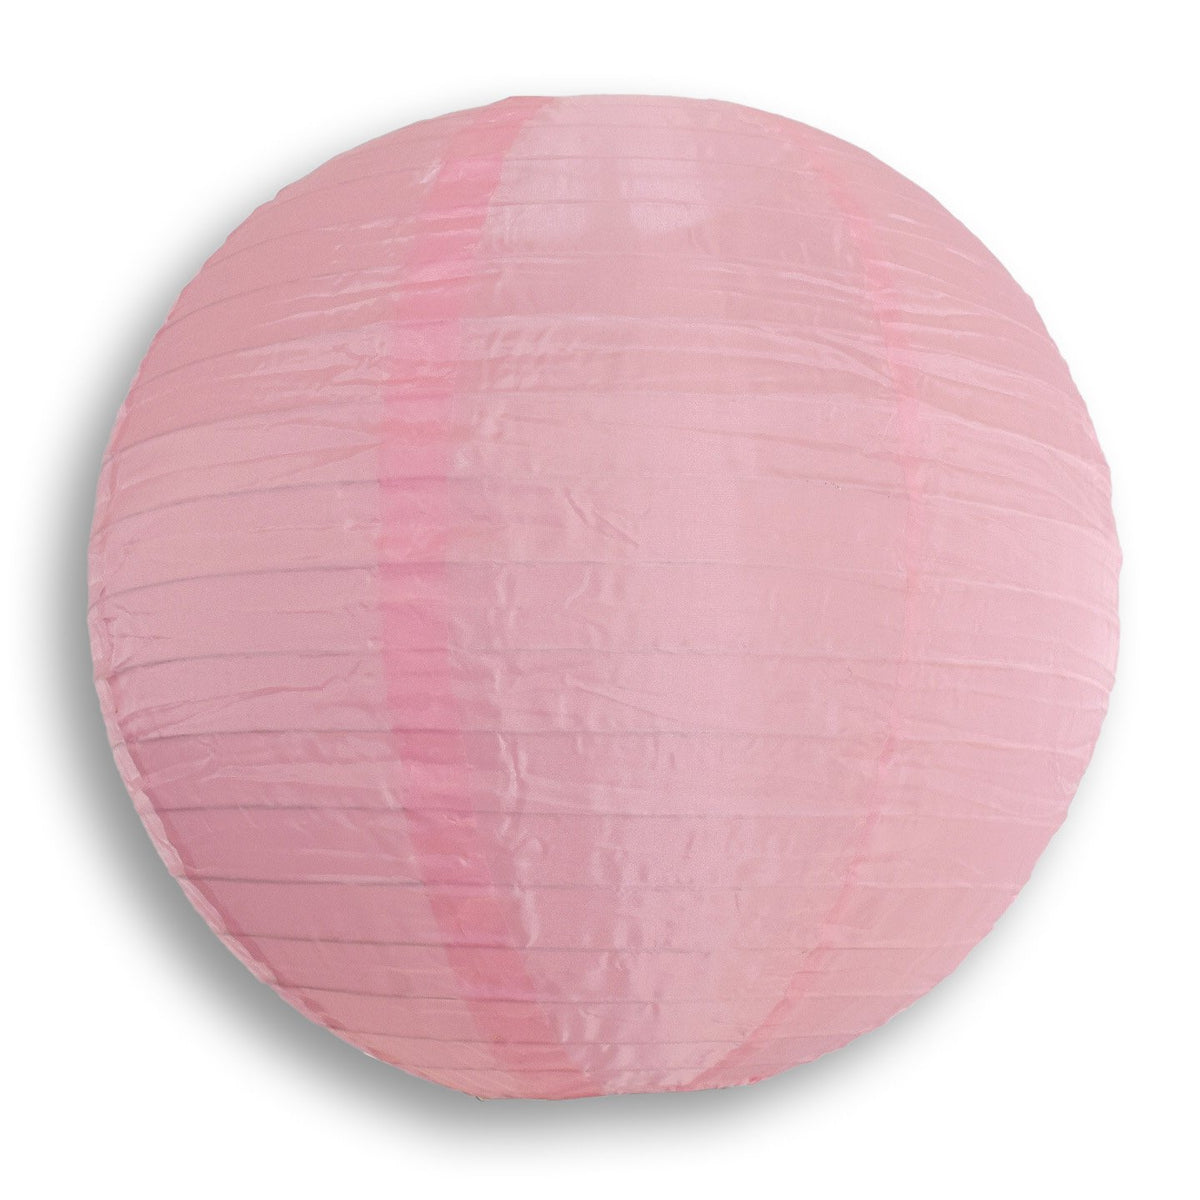 24&quot; Pink Shimmering Nylon Lantern, Even Ribbing, Durable, Hanging - PaperLanternStore.com - Paper Lanterns, Decor, Party Lights &amp; More